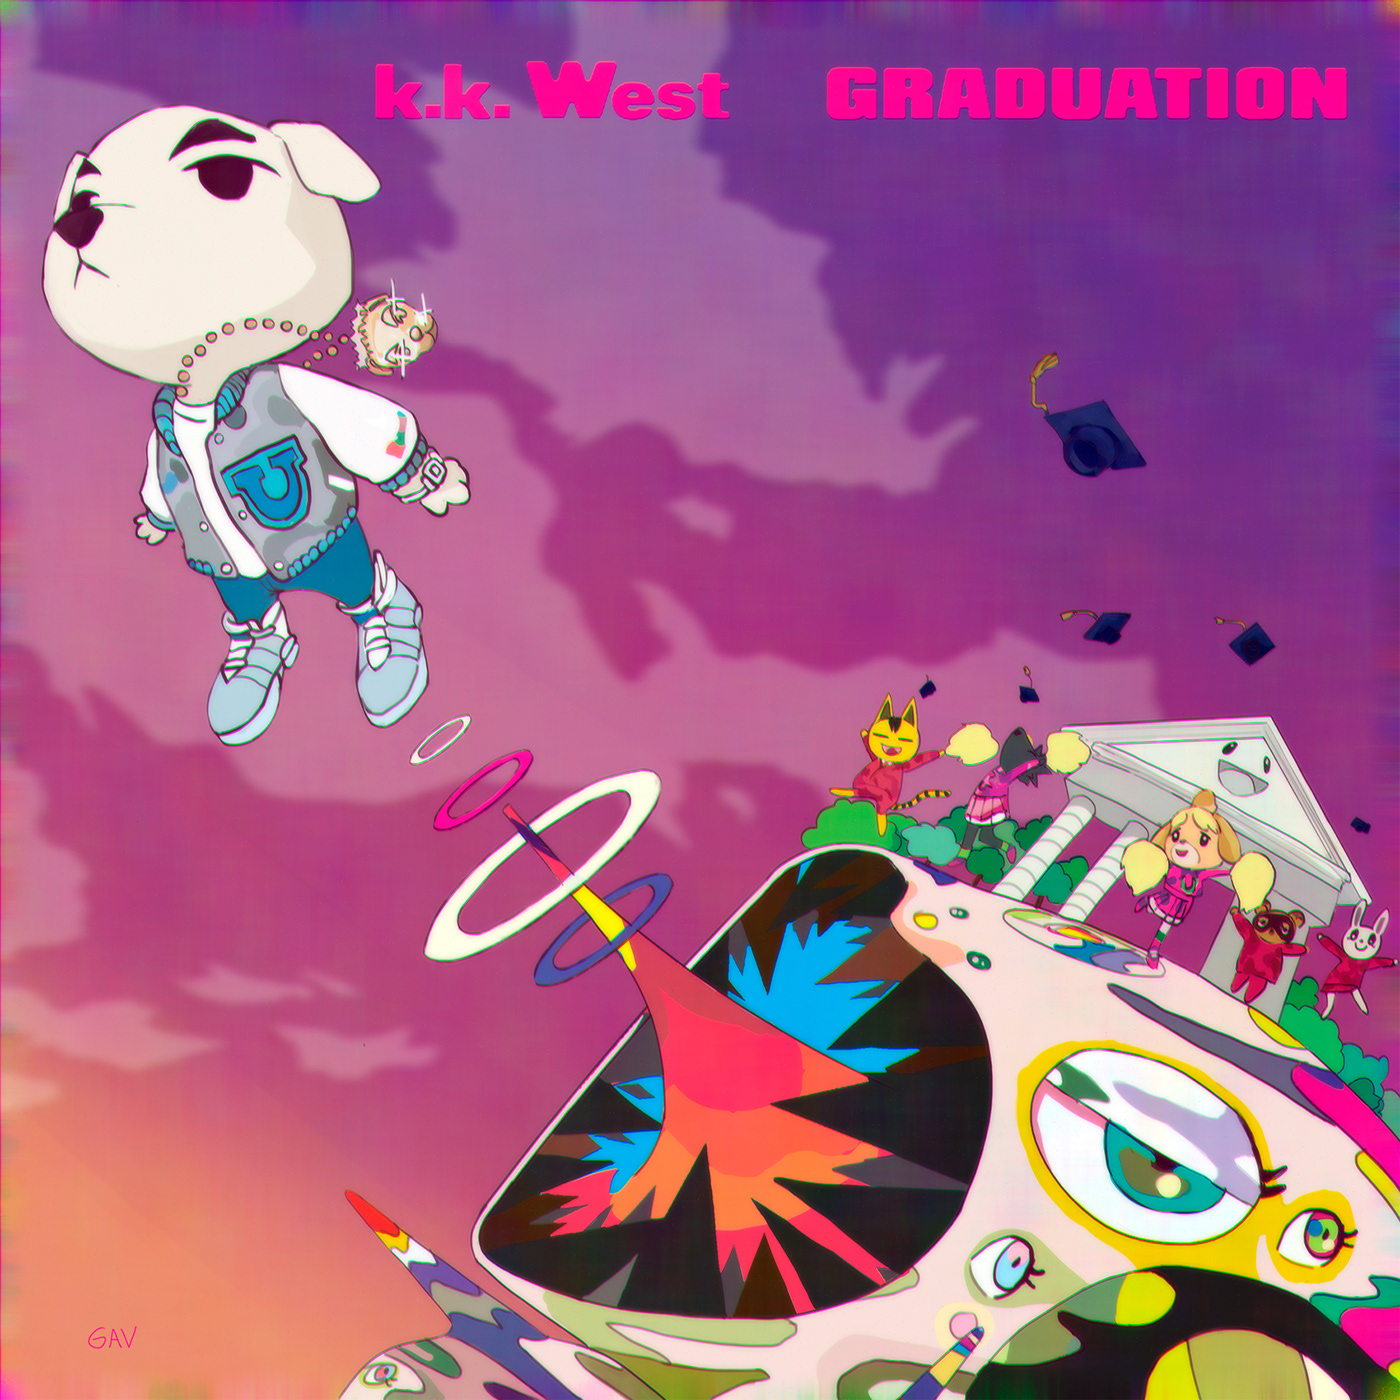 Animal Crossing Digital Art  graduation ILLUSTRATION  k.k. slider Kanye West kk slider